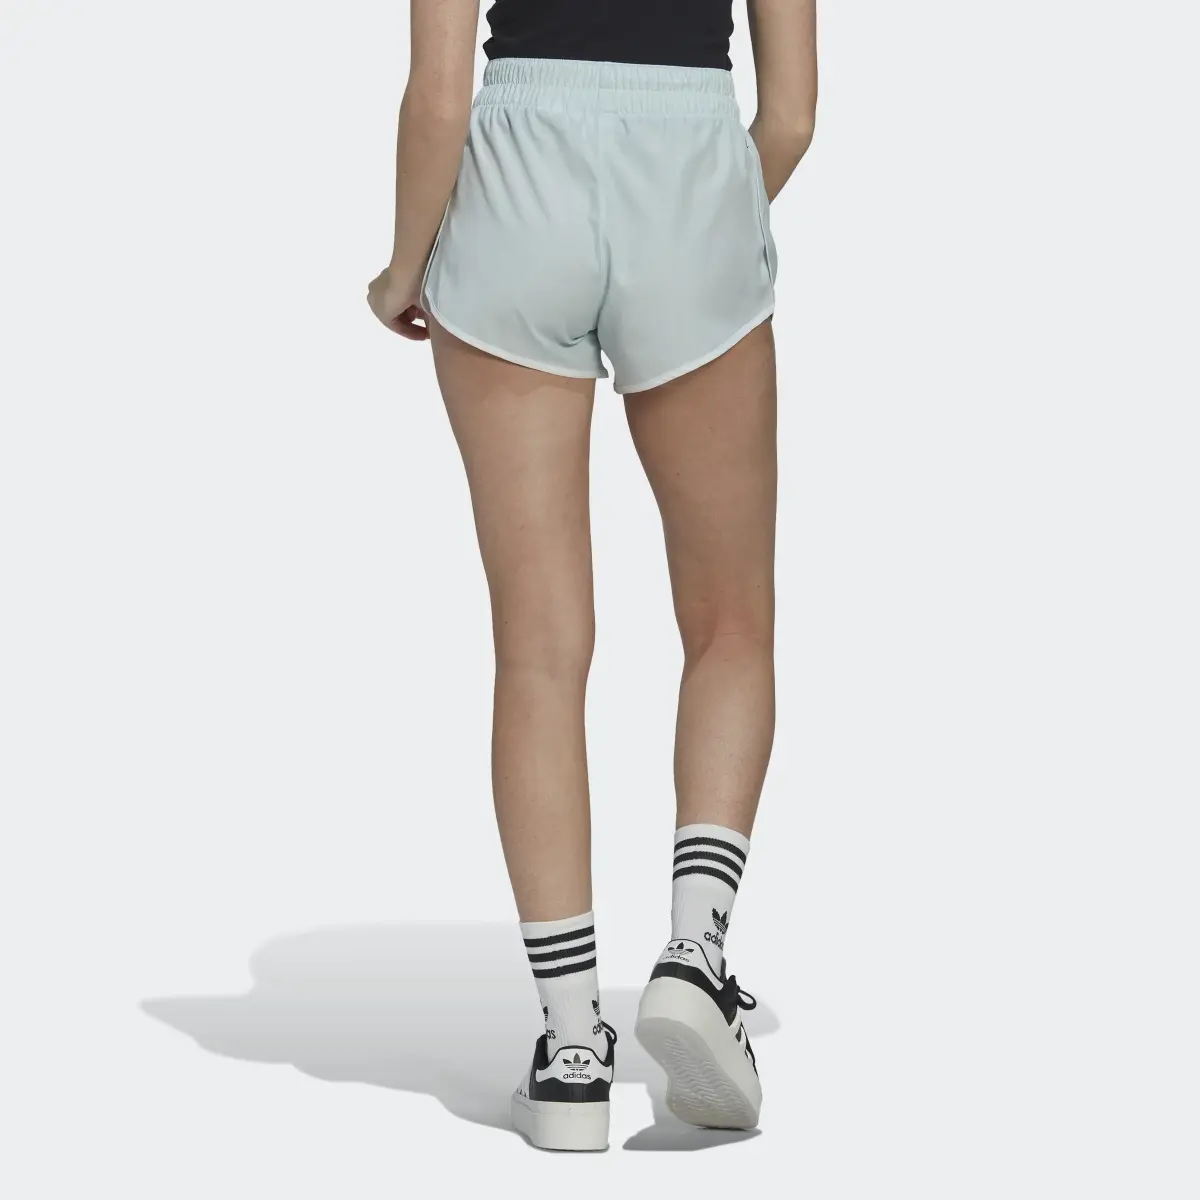 Adidas Always Original Laced Shorts. 2